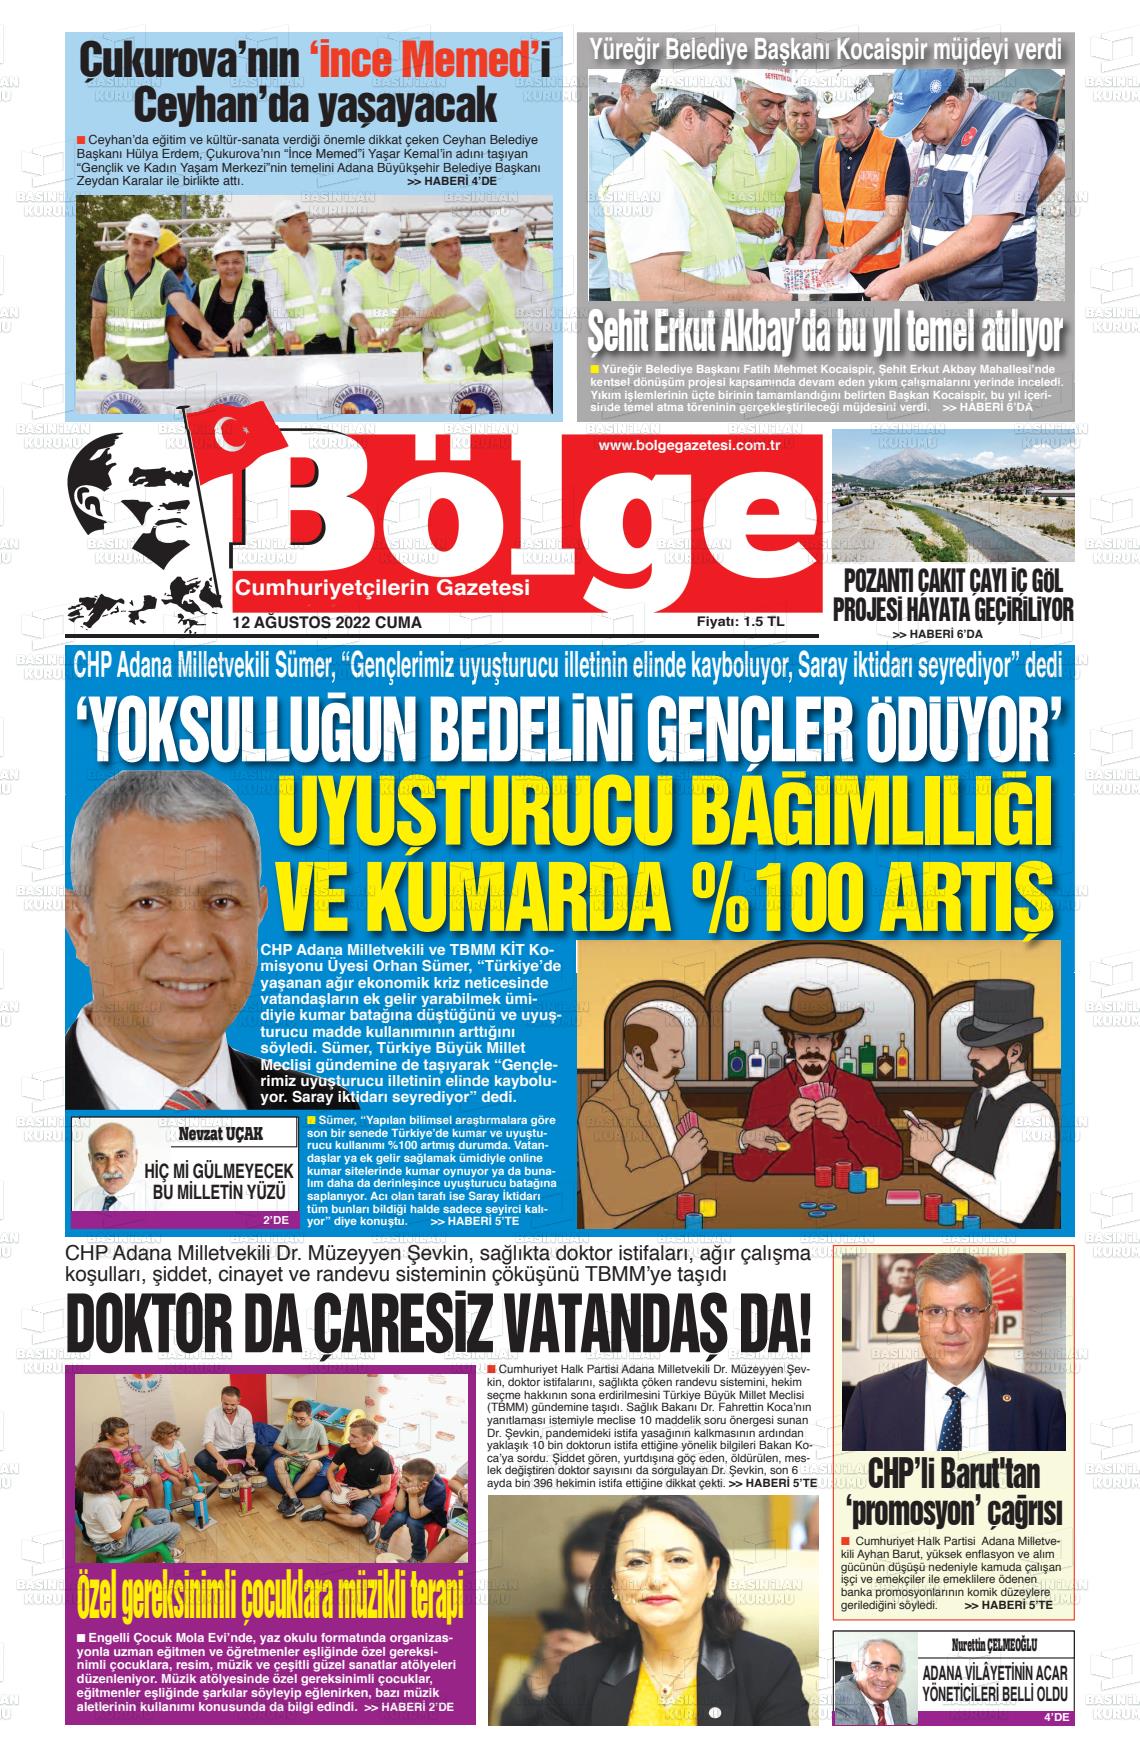 12 Ağustos 2022 Adana Bölge Gazete Manşeti